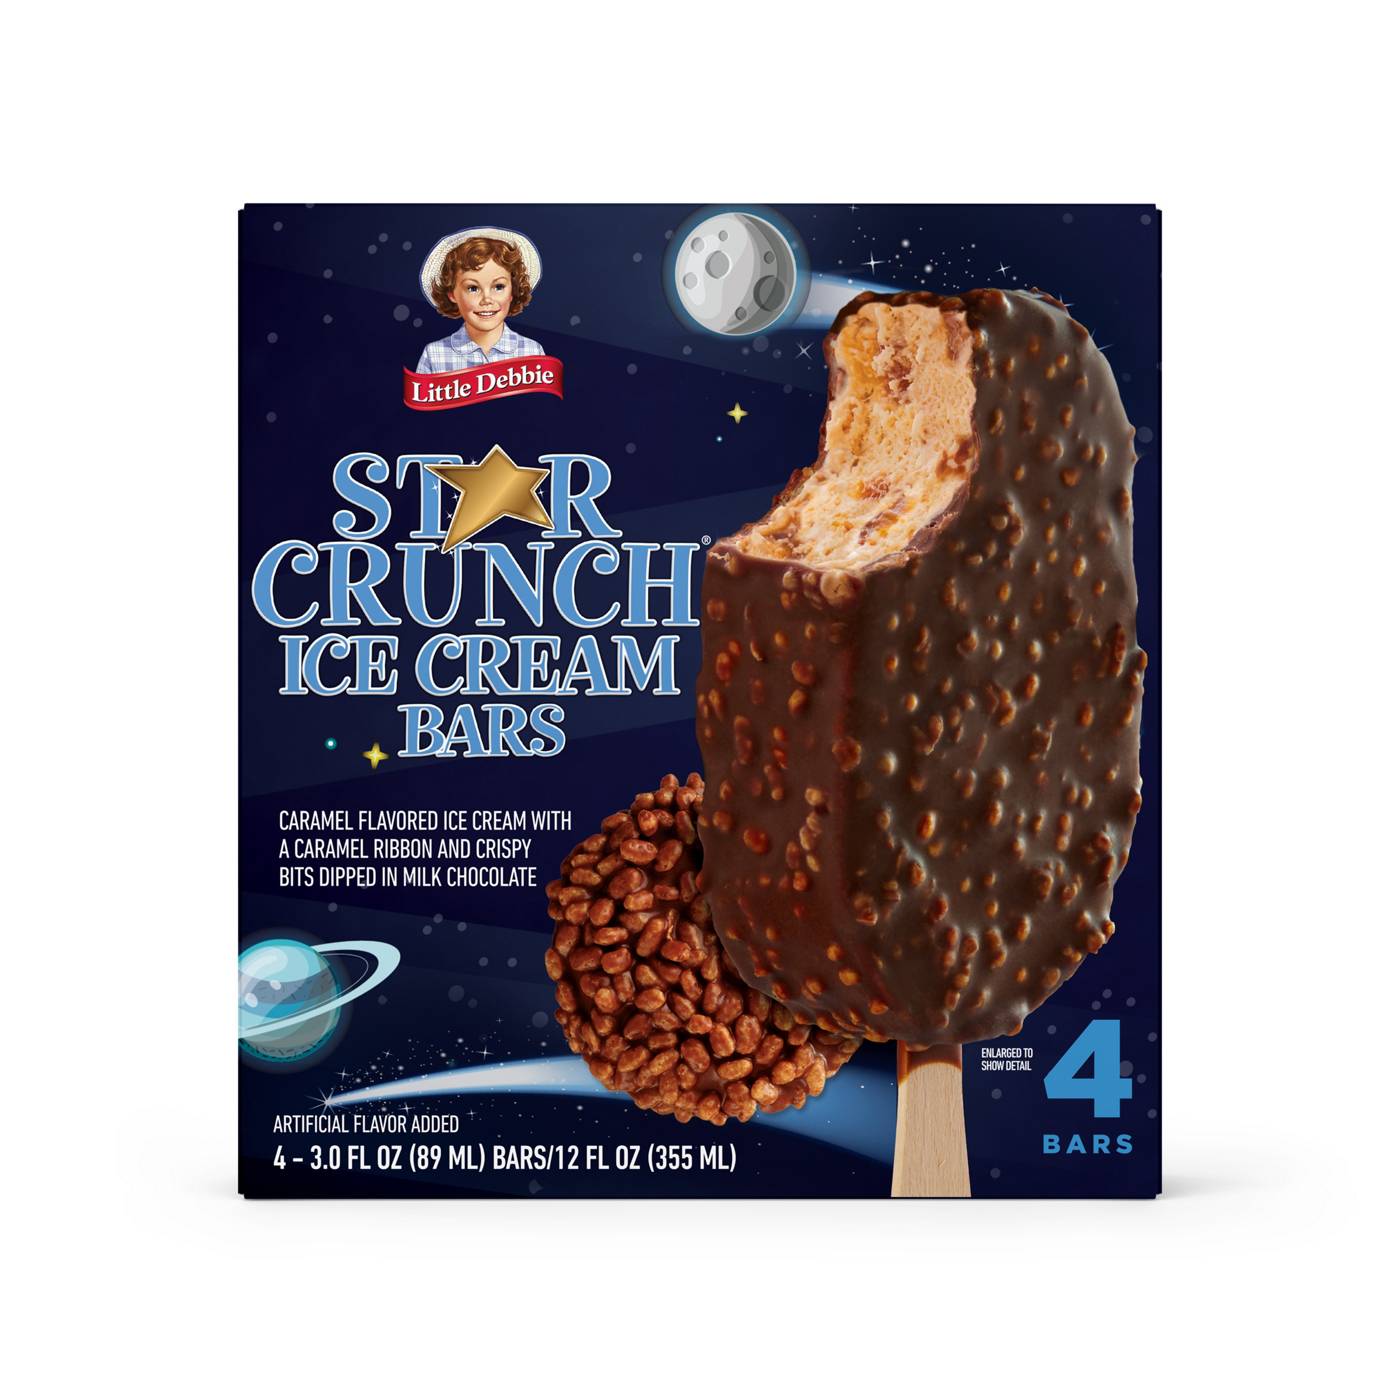 Little Debbie Star Crunch Ice Cream Bars; image 1 of 3